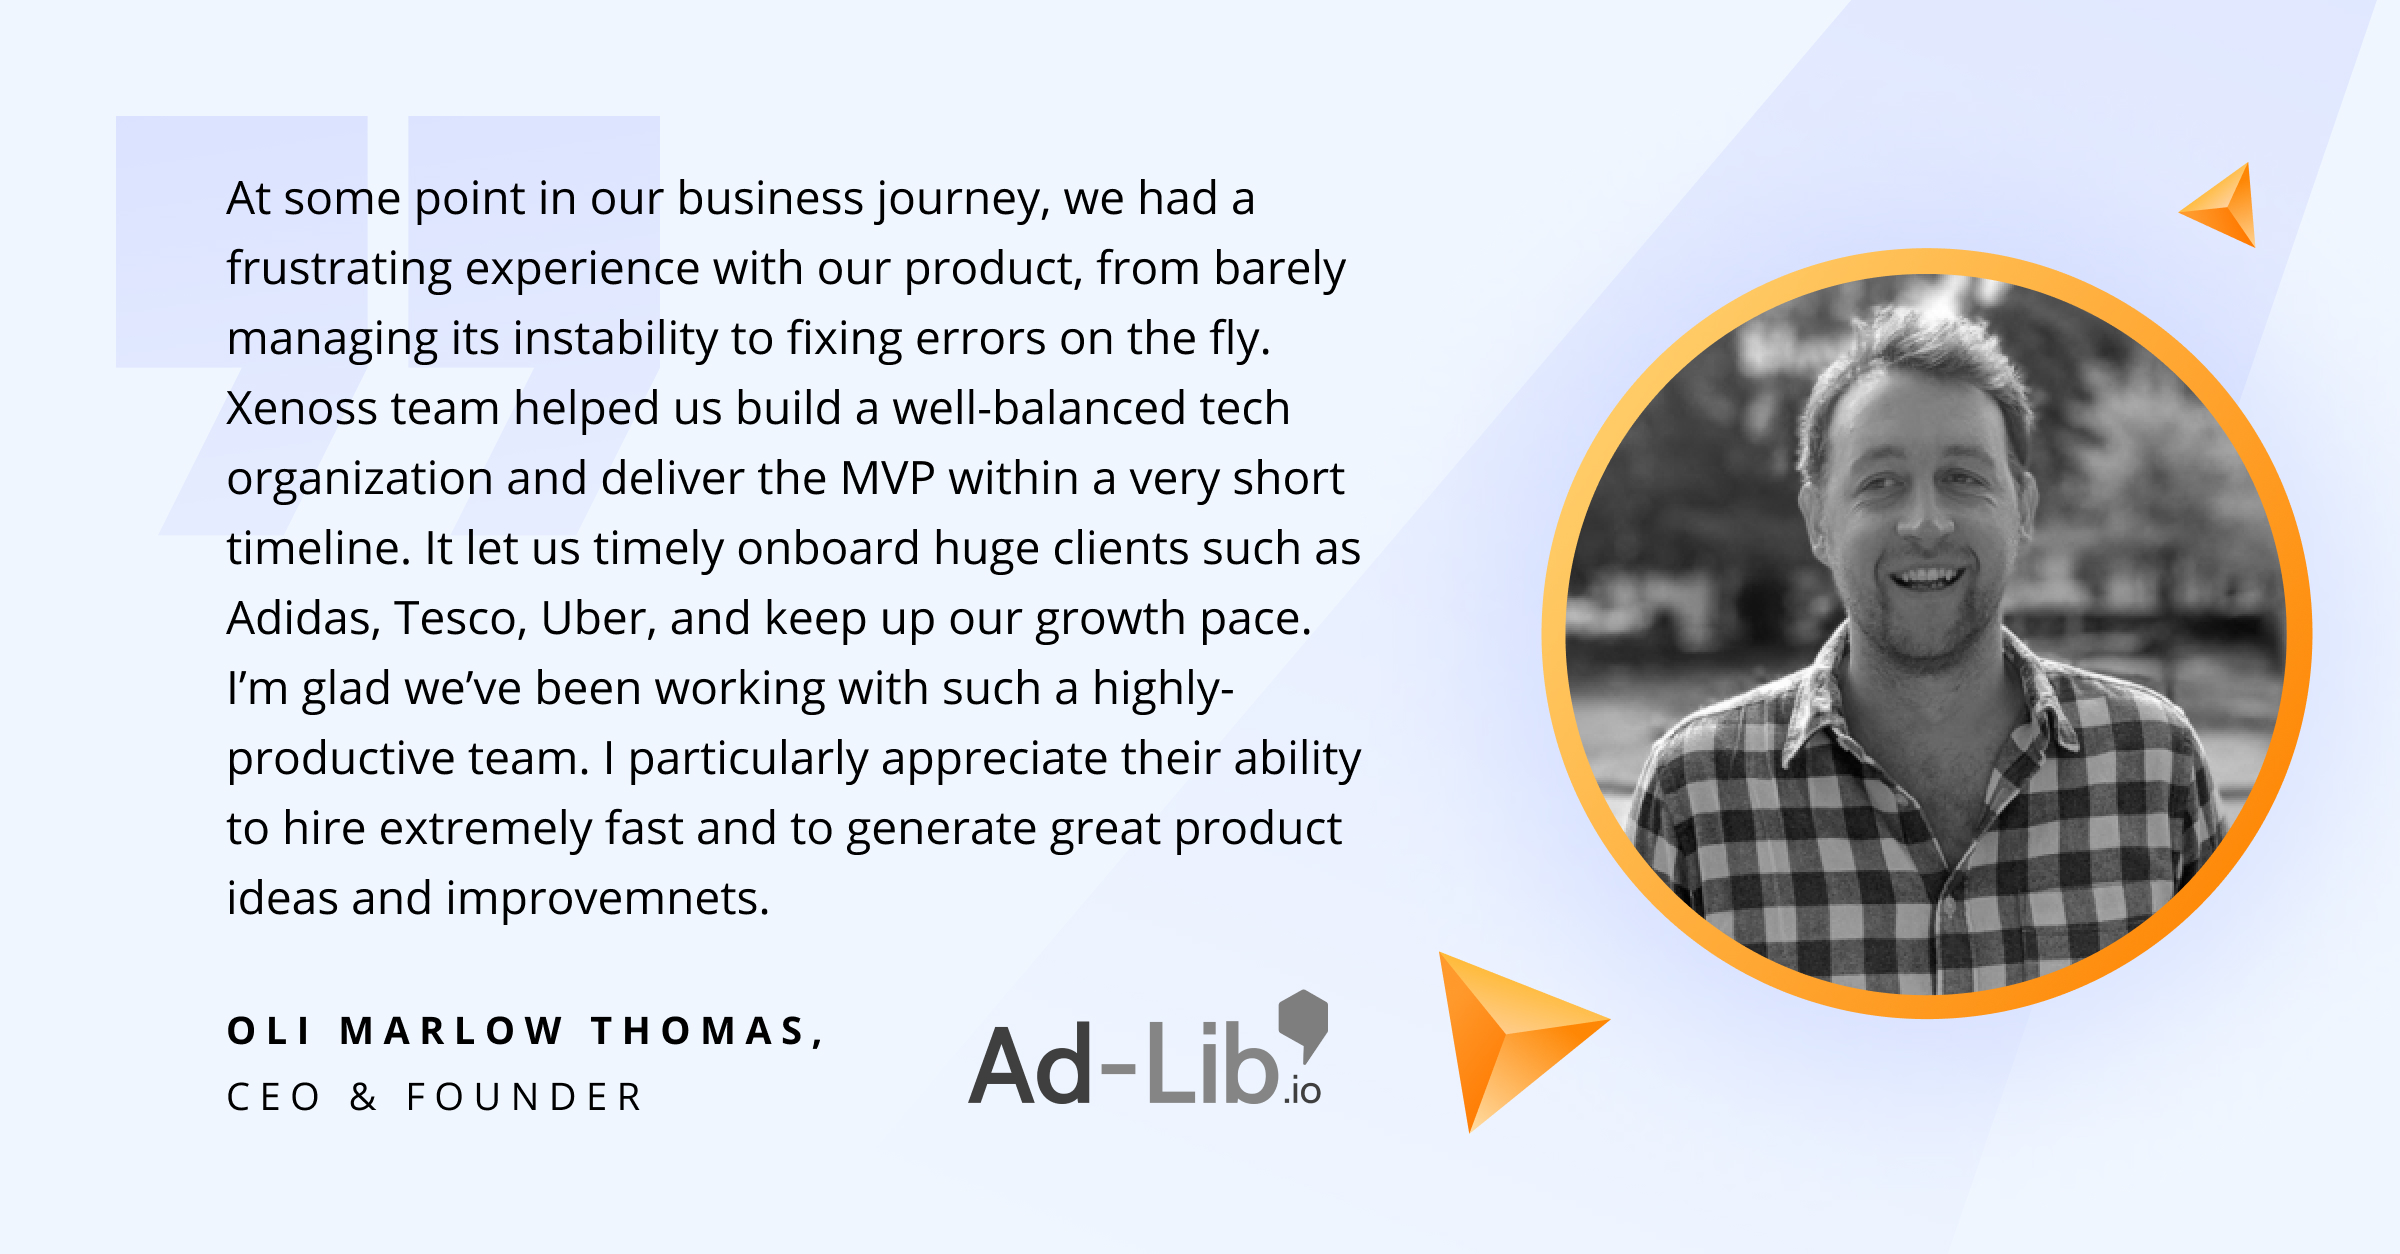 Oli Marlow Thomas, CEO at Ad-Lib.io, on collaboration with Xenoss | Xenoss Blog